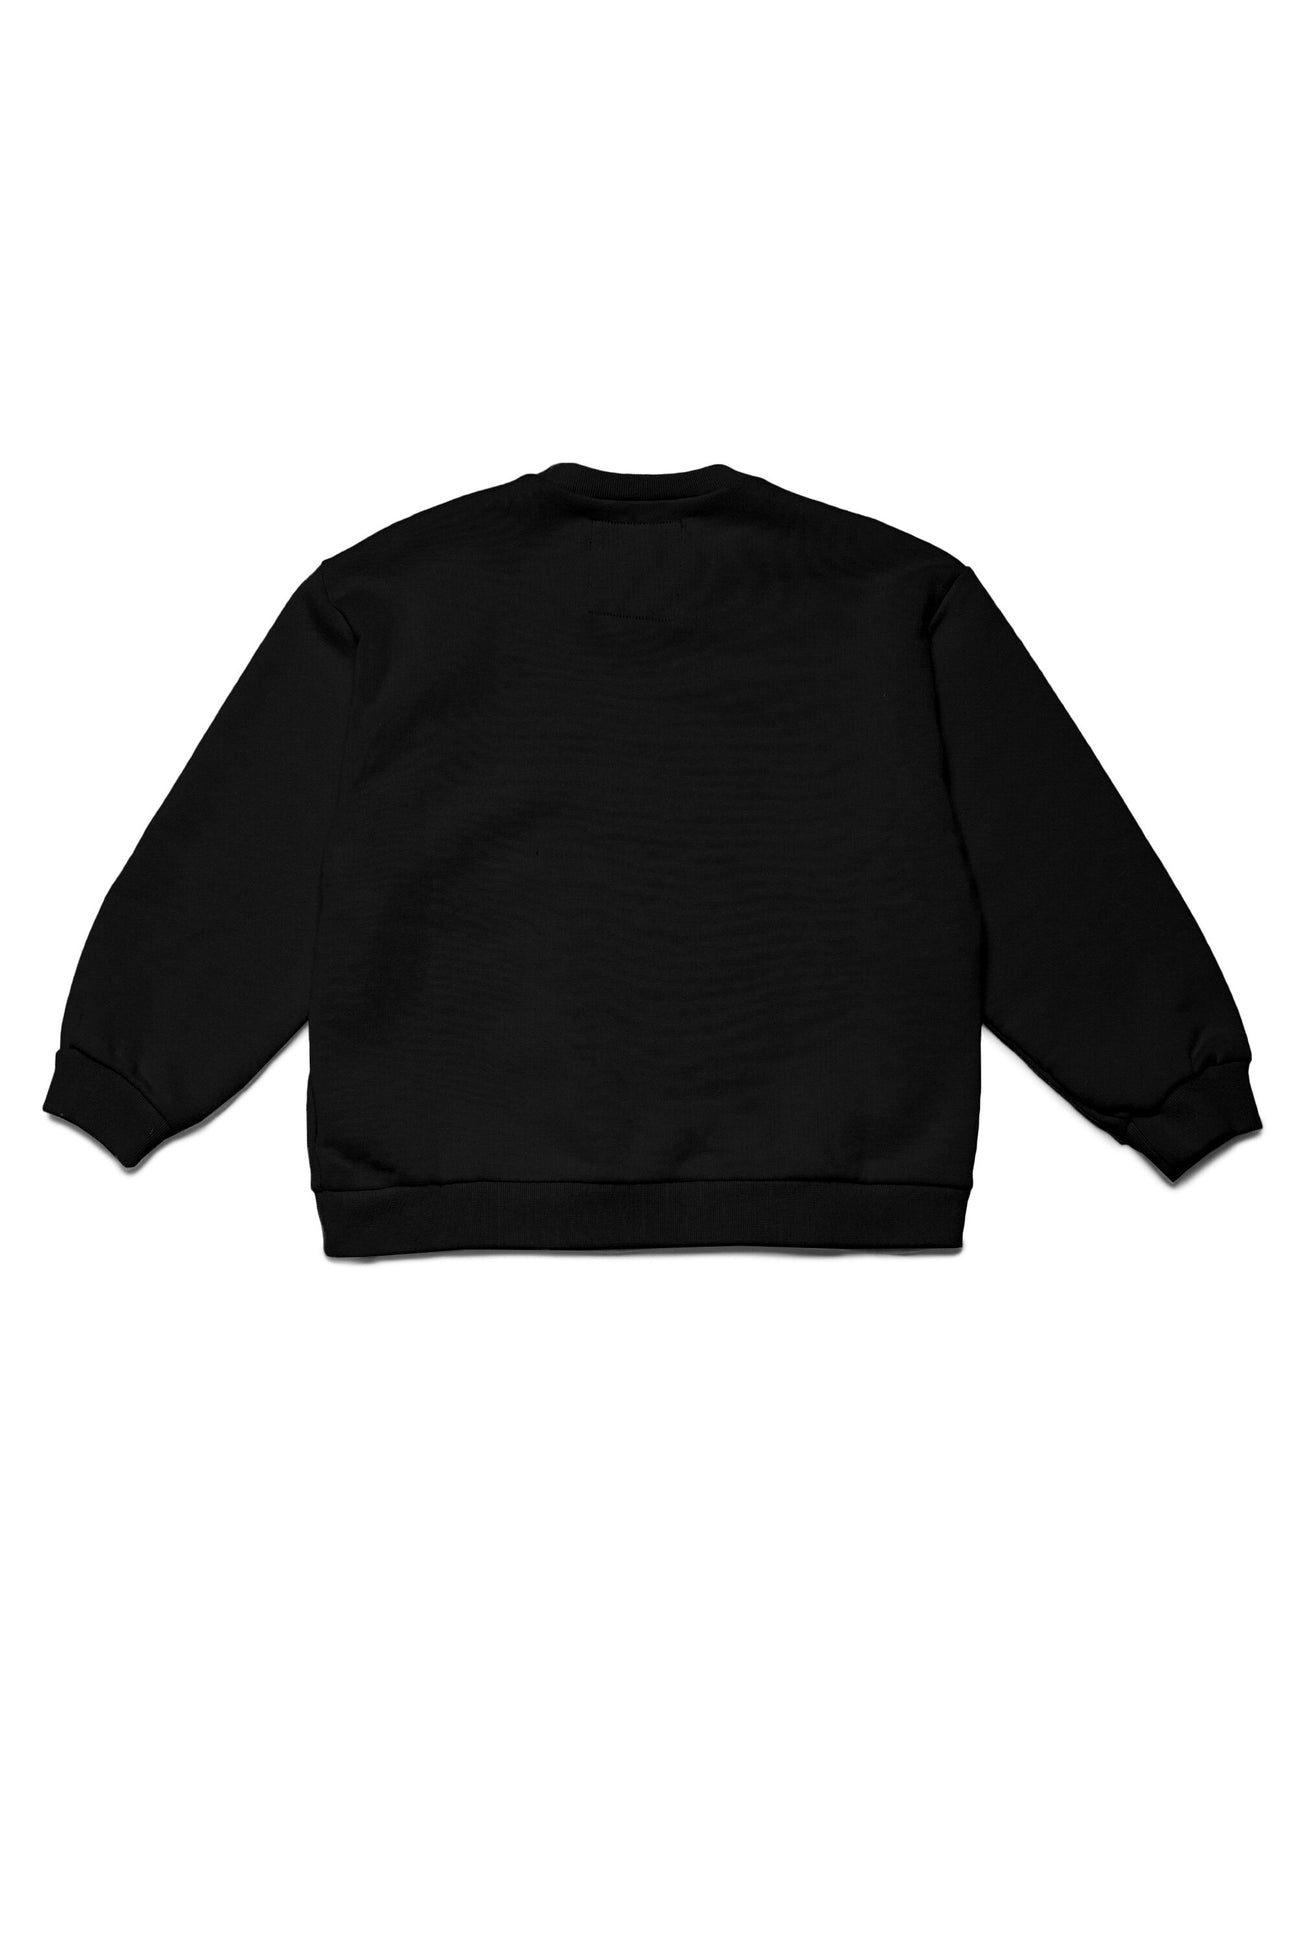 Deadstock fabric sweatshirt with MYAR logo Deadstock fabric sweatshirt with MYAR logo